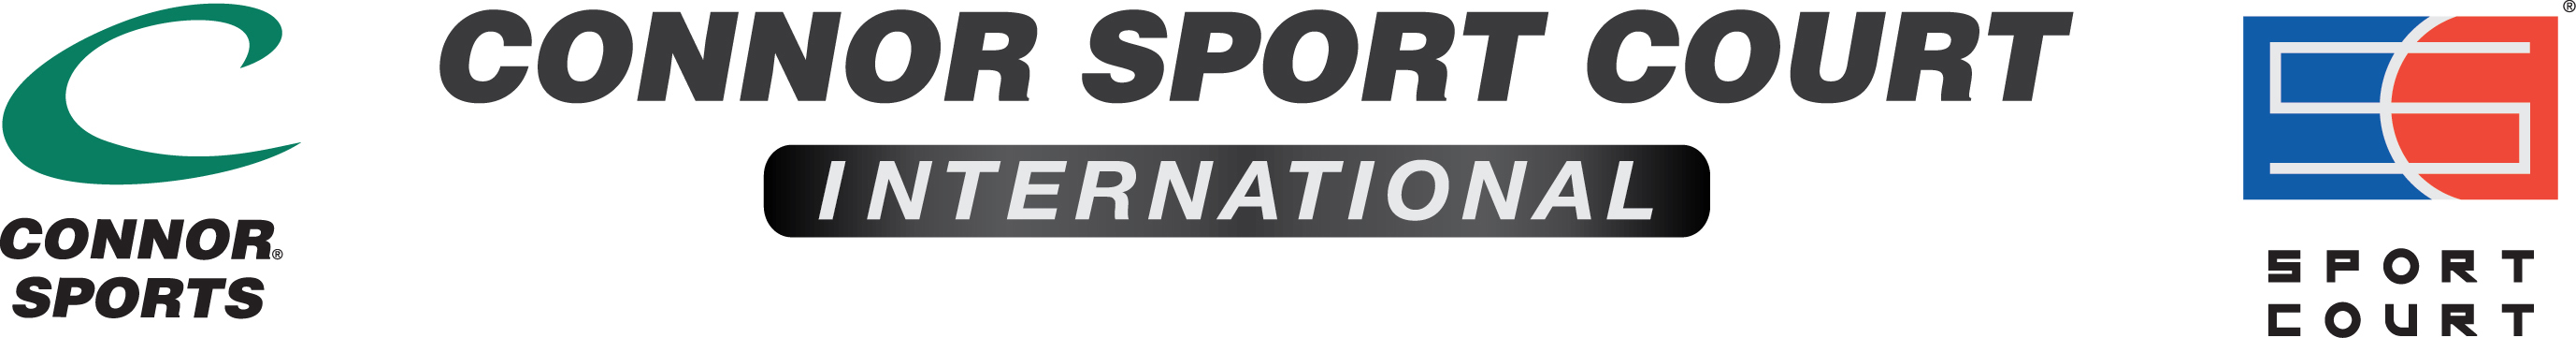 Connor Sport Court International logo